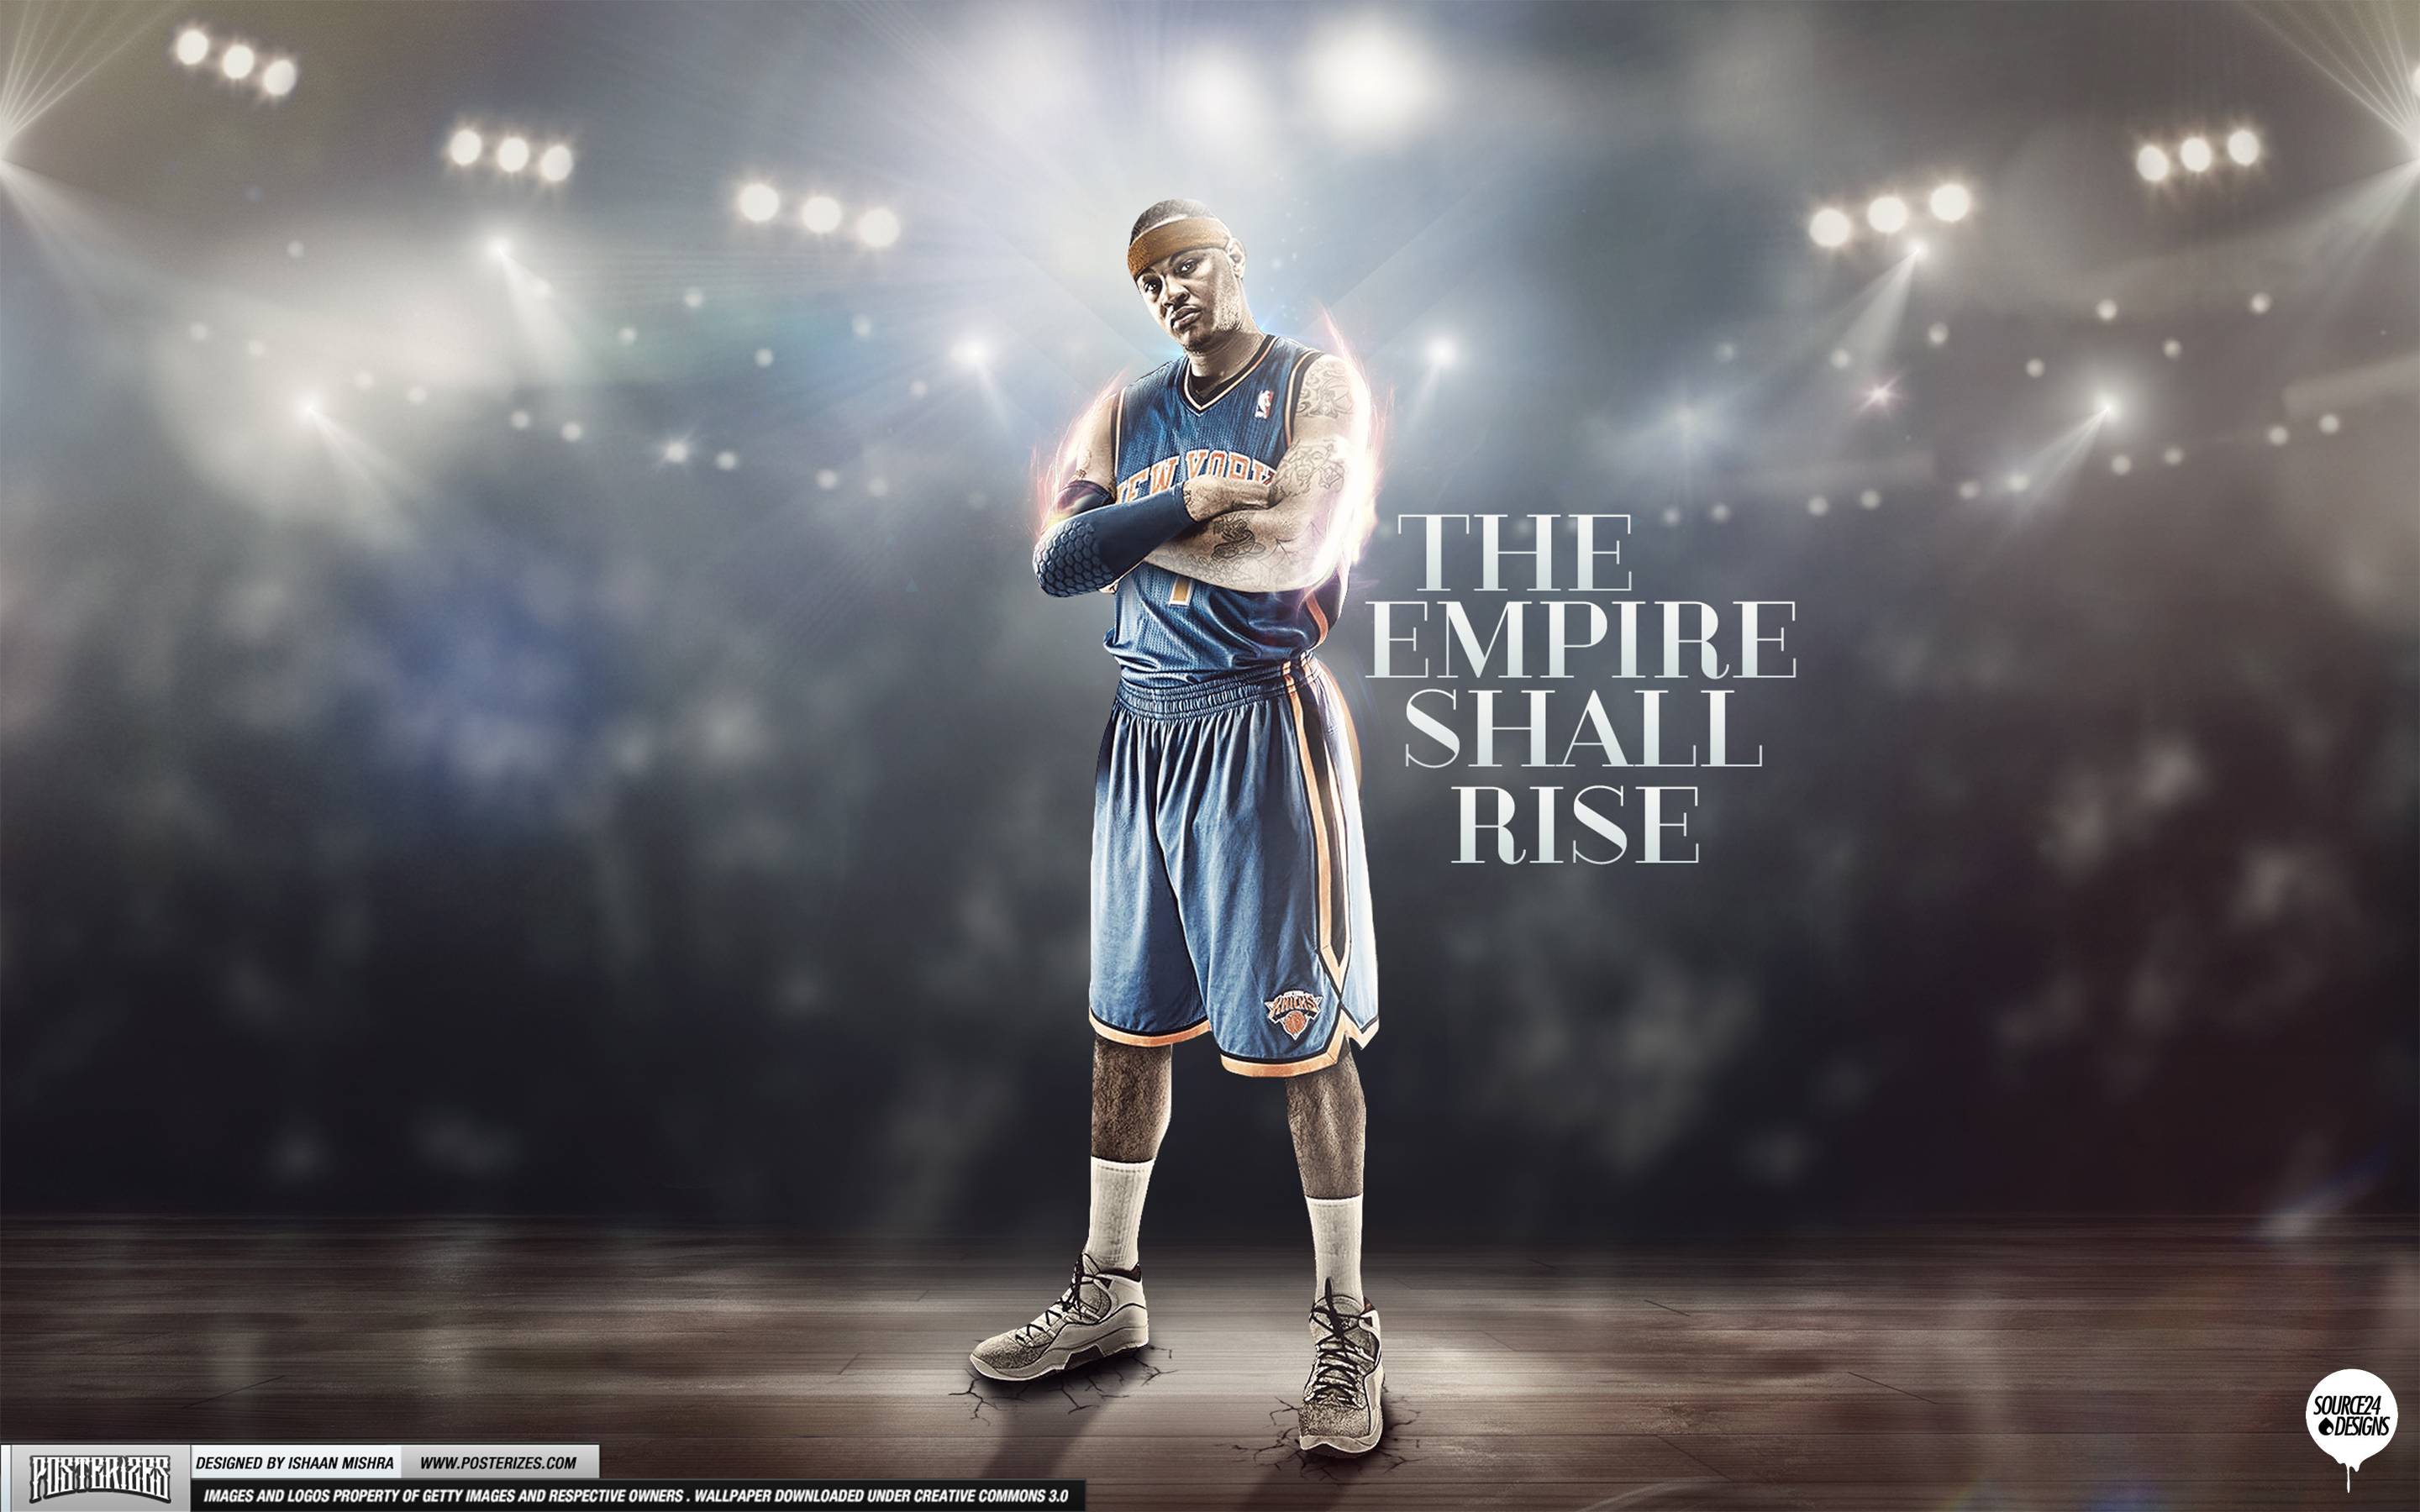 New York Knicks. Posterizes. NBA Wallpaper & Basketball Designs